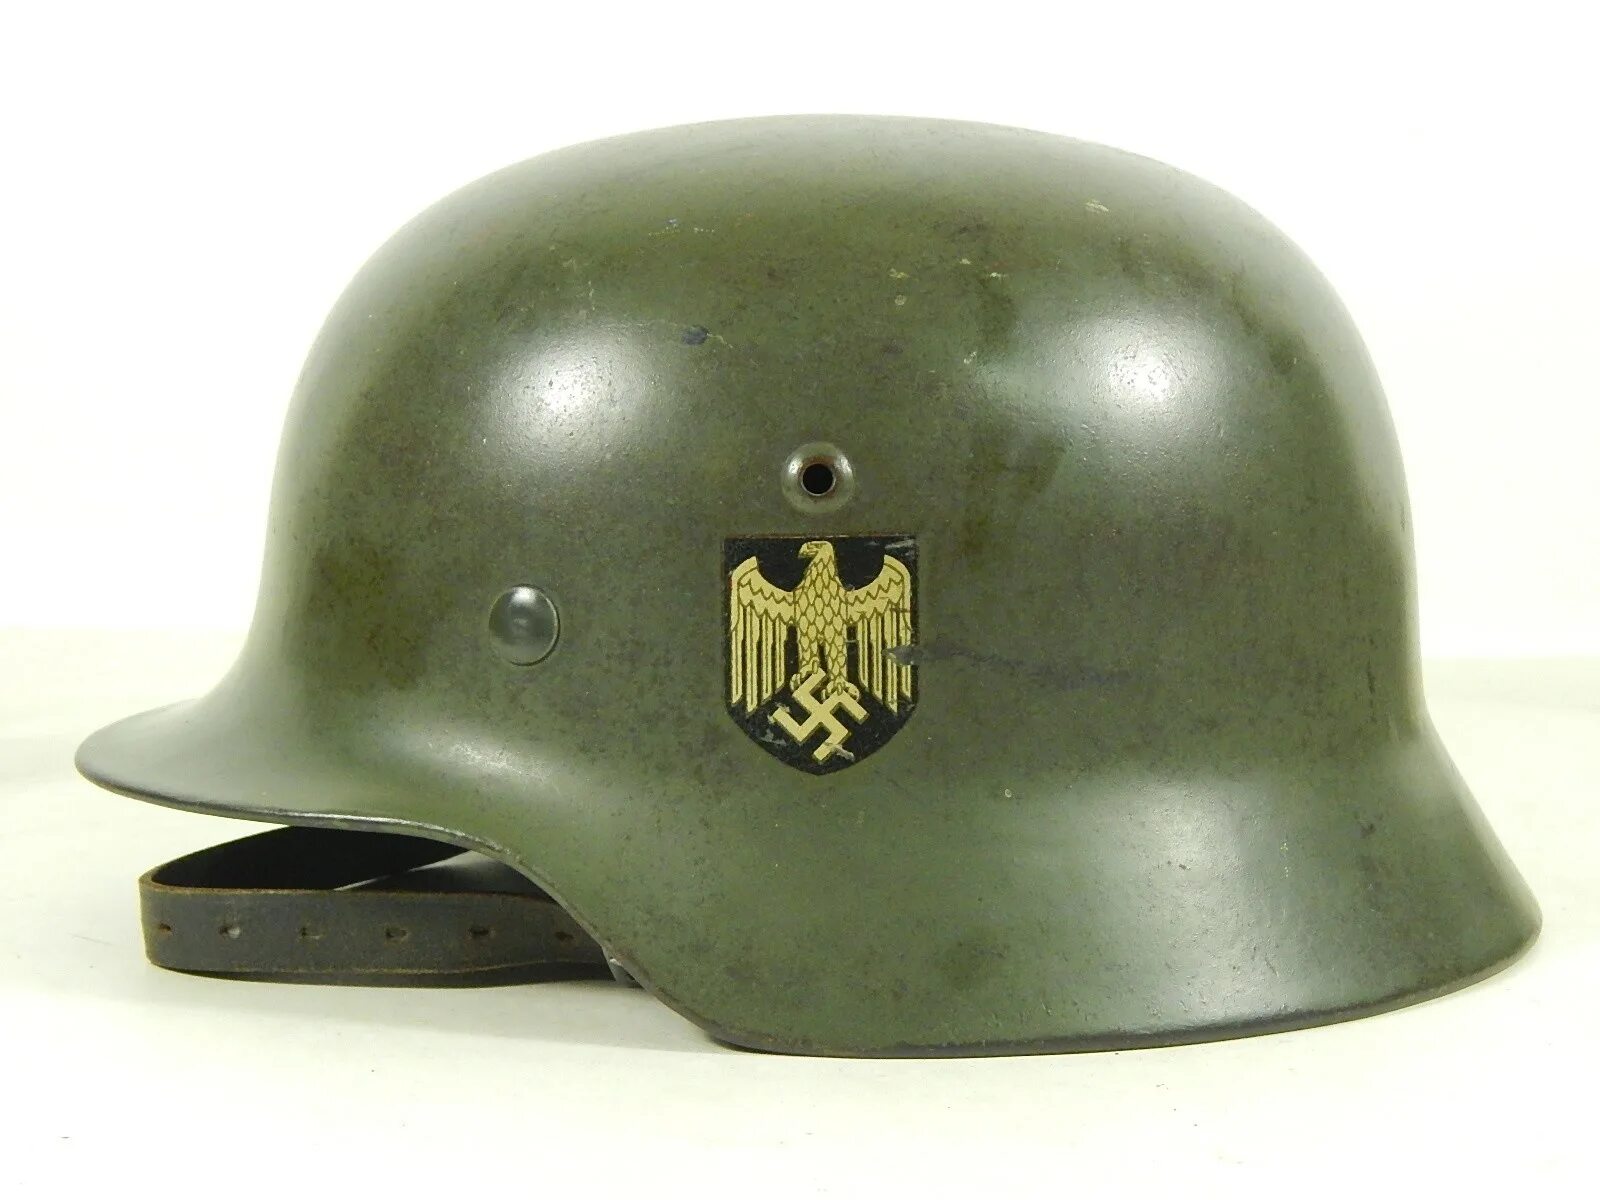 M35 шлем. Немецкий шлем m35. Финская каска 1939 сбоку. M35 каска.